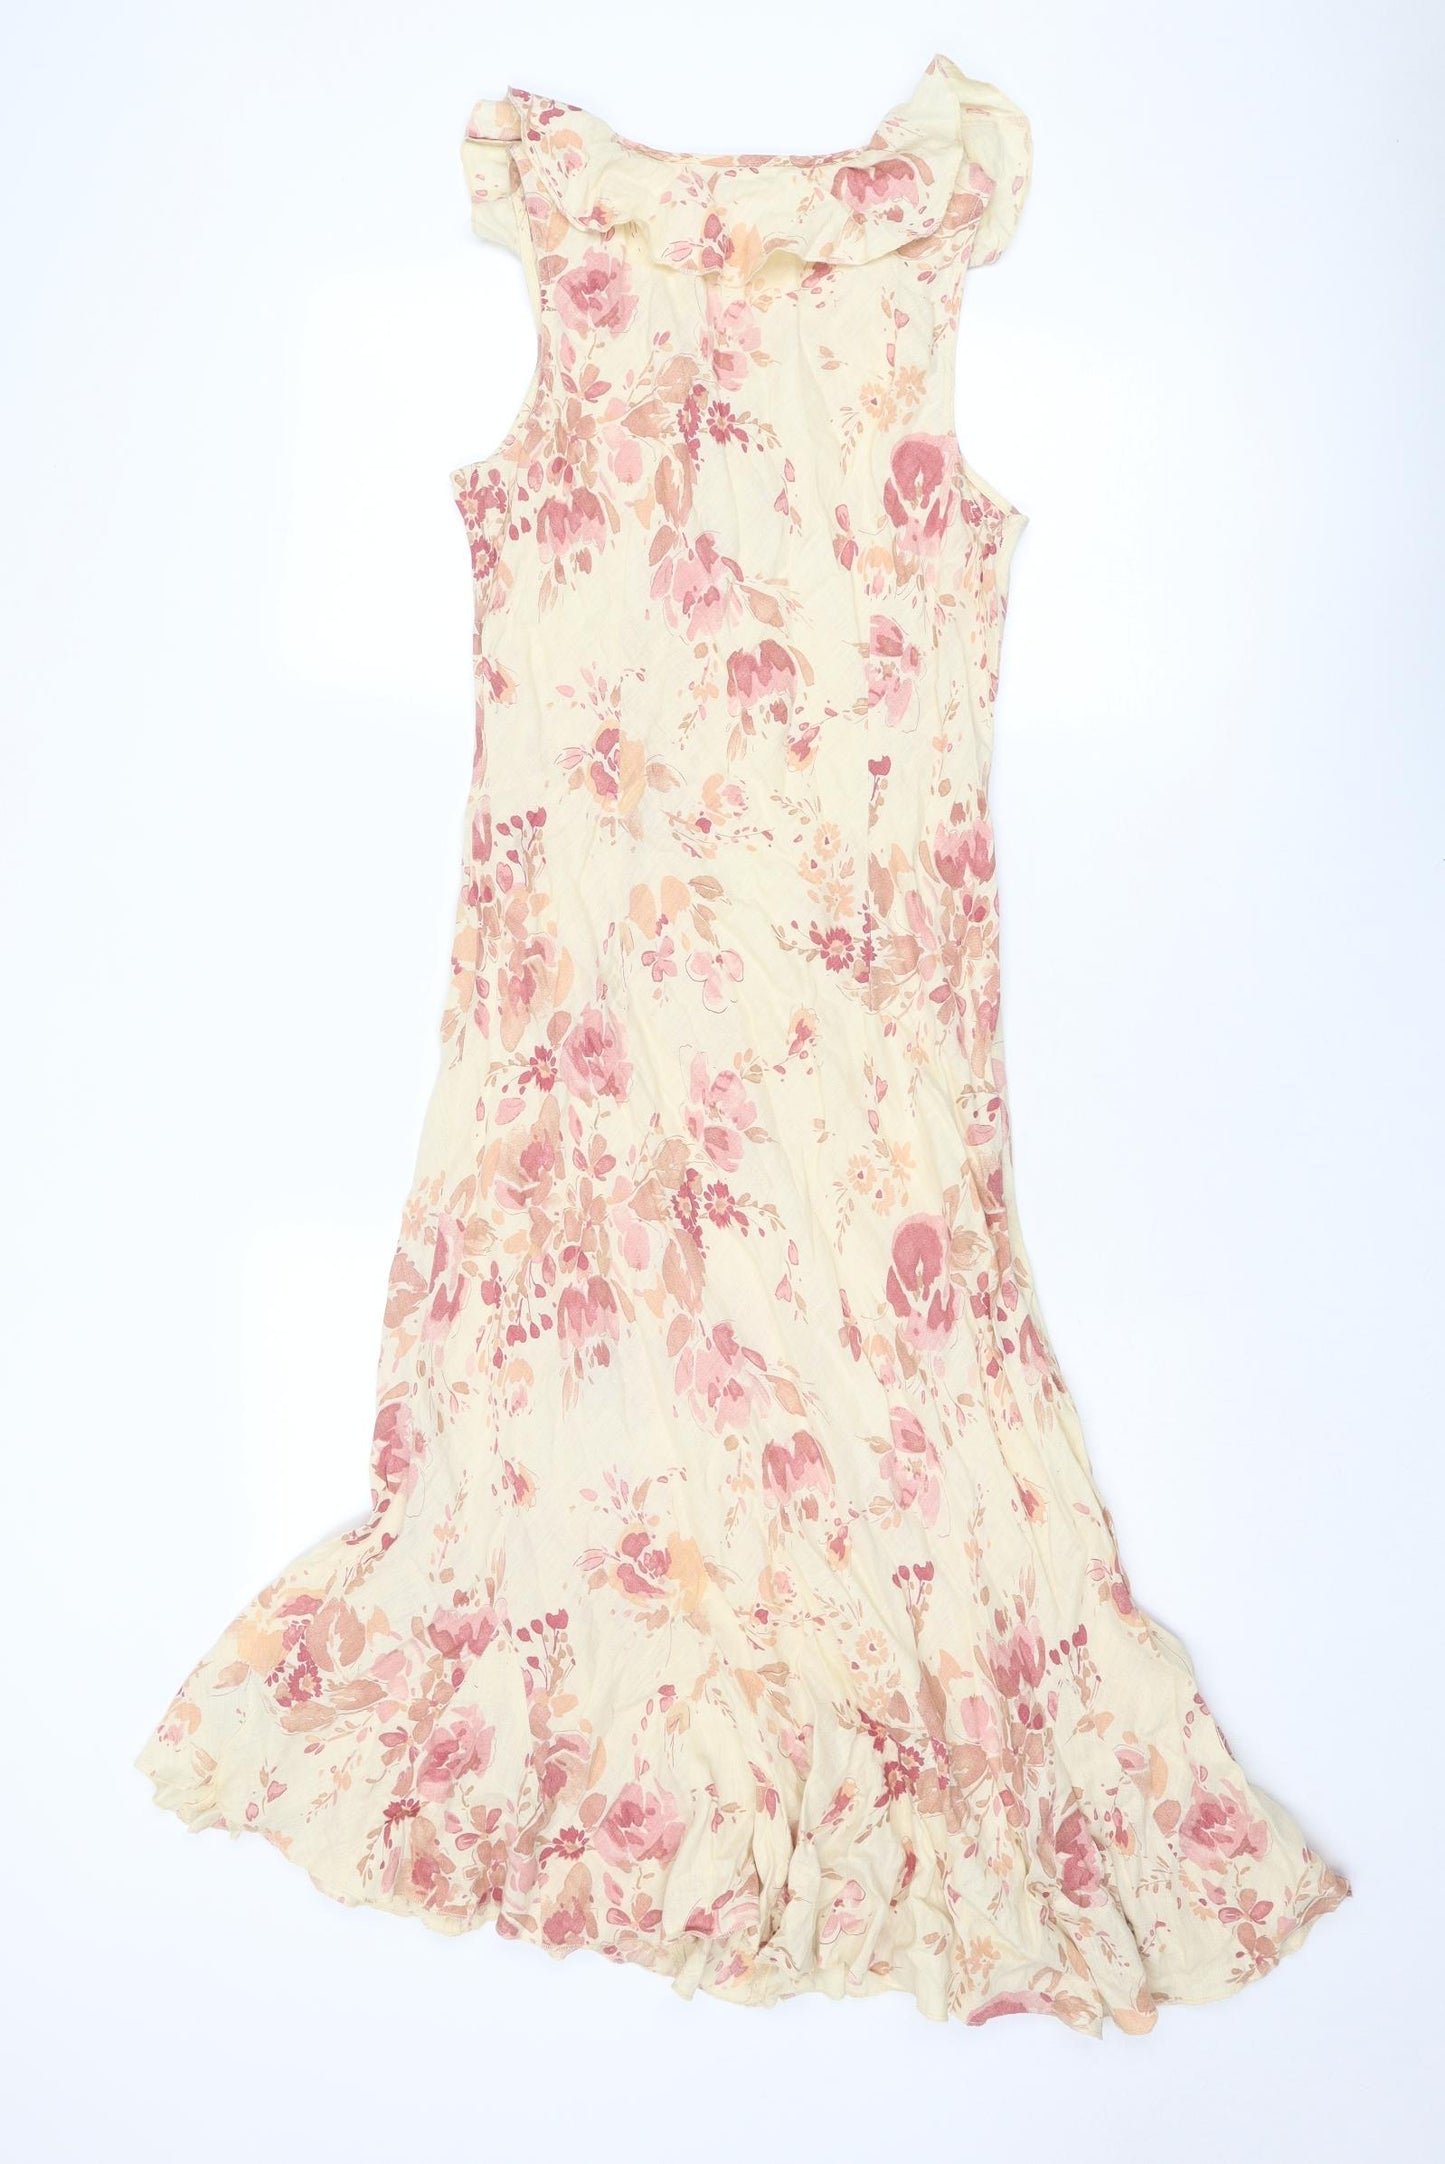 Per Una Womens Beige Floral Linen Slip Dress Size 12 V-Neck Pullover